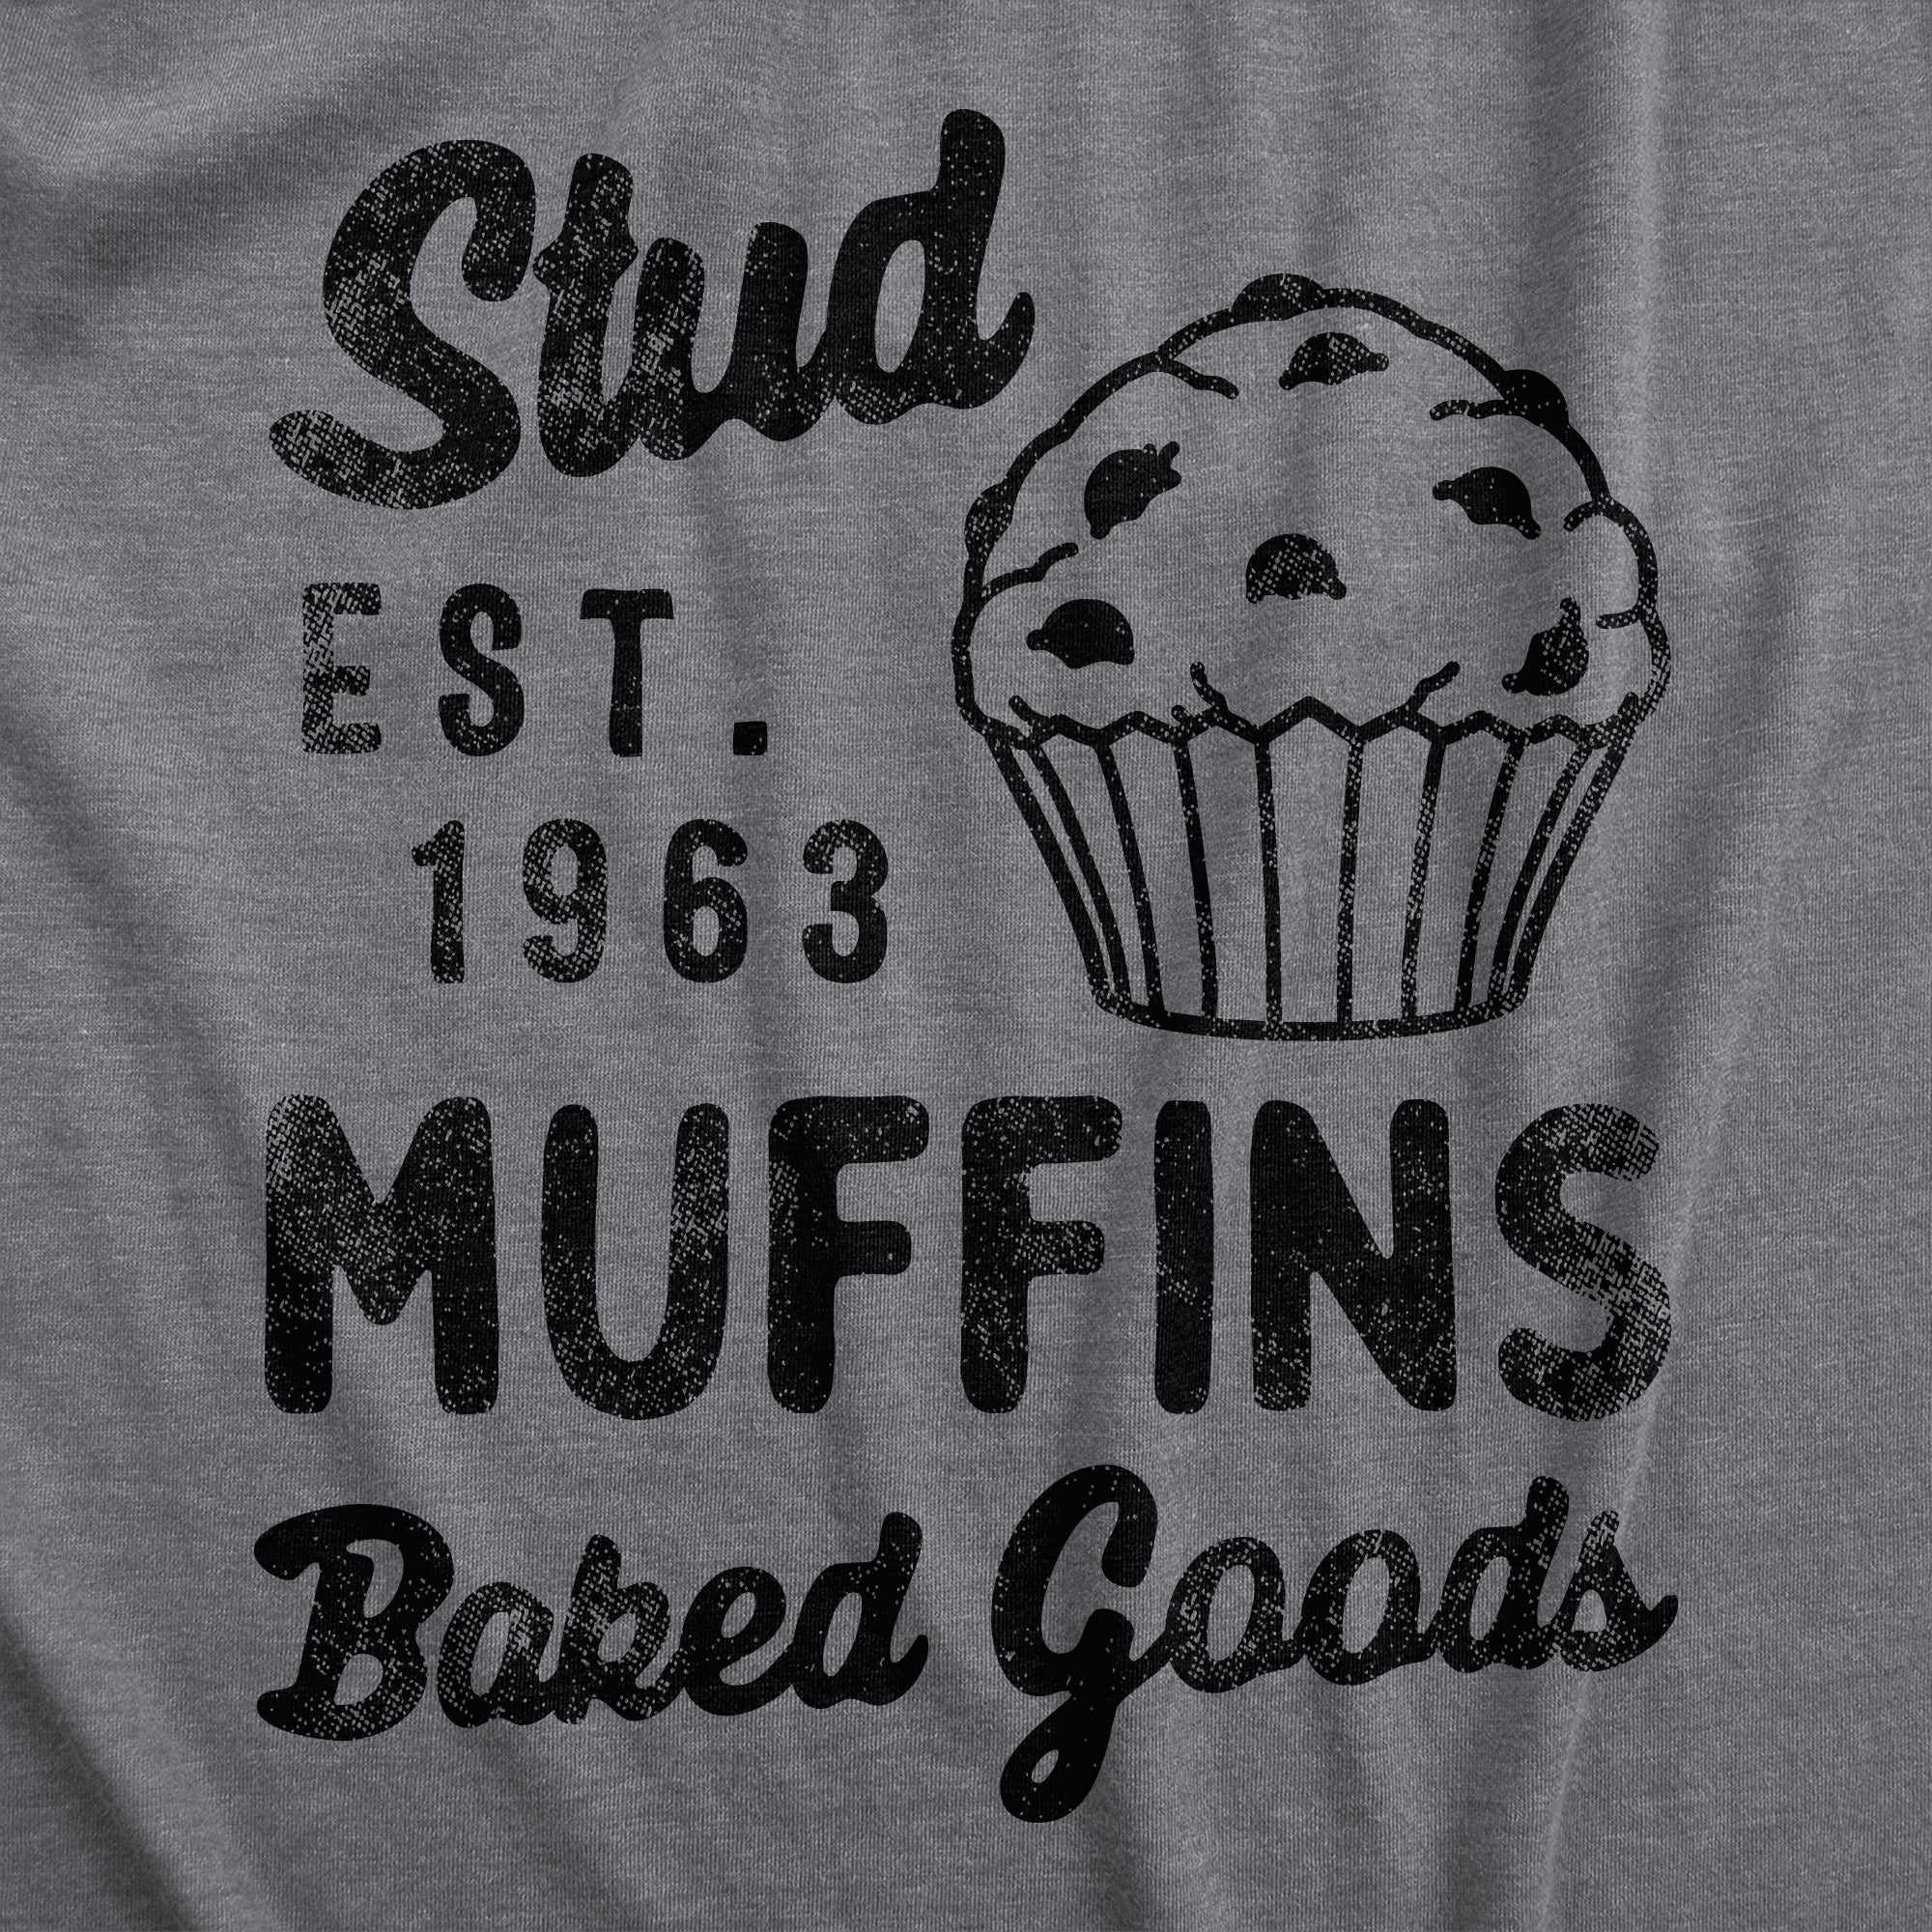 Funny Dark Heather Grey - STUD Stud Muffins Baked Goods Onesie Nerdy Food sarcastic Tee